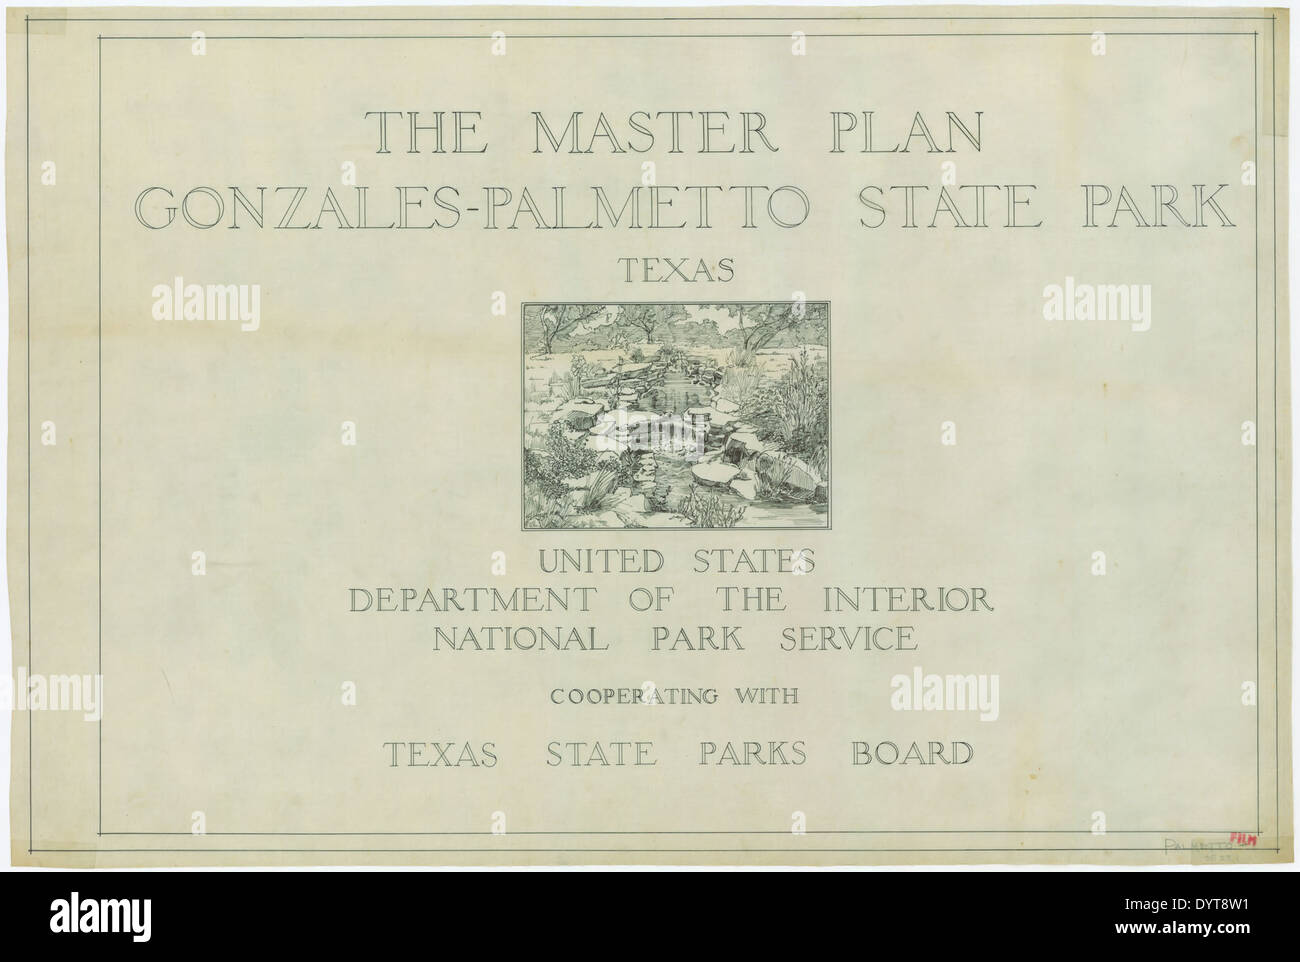 Palmetto State Park - Master Plan - SP29 001 Foto Stock